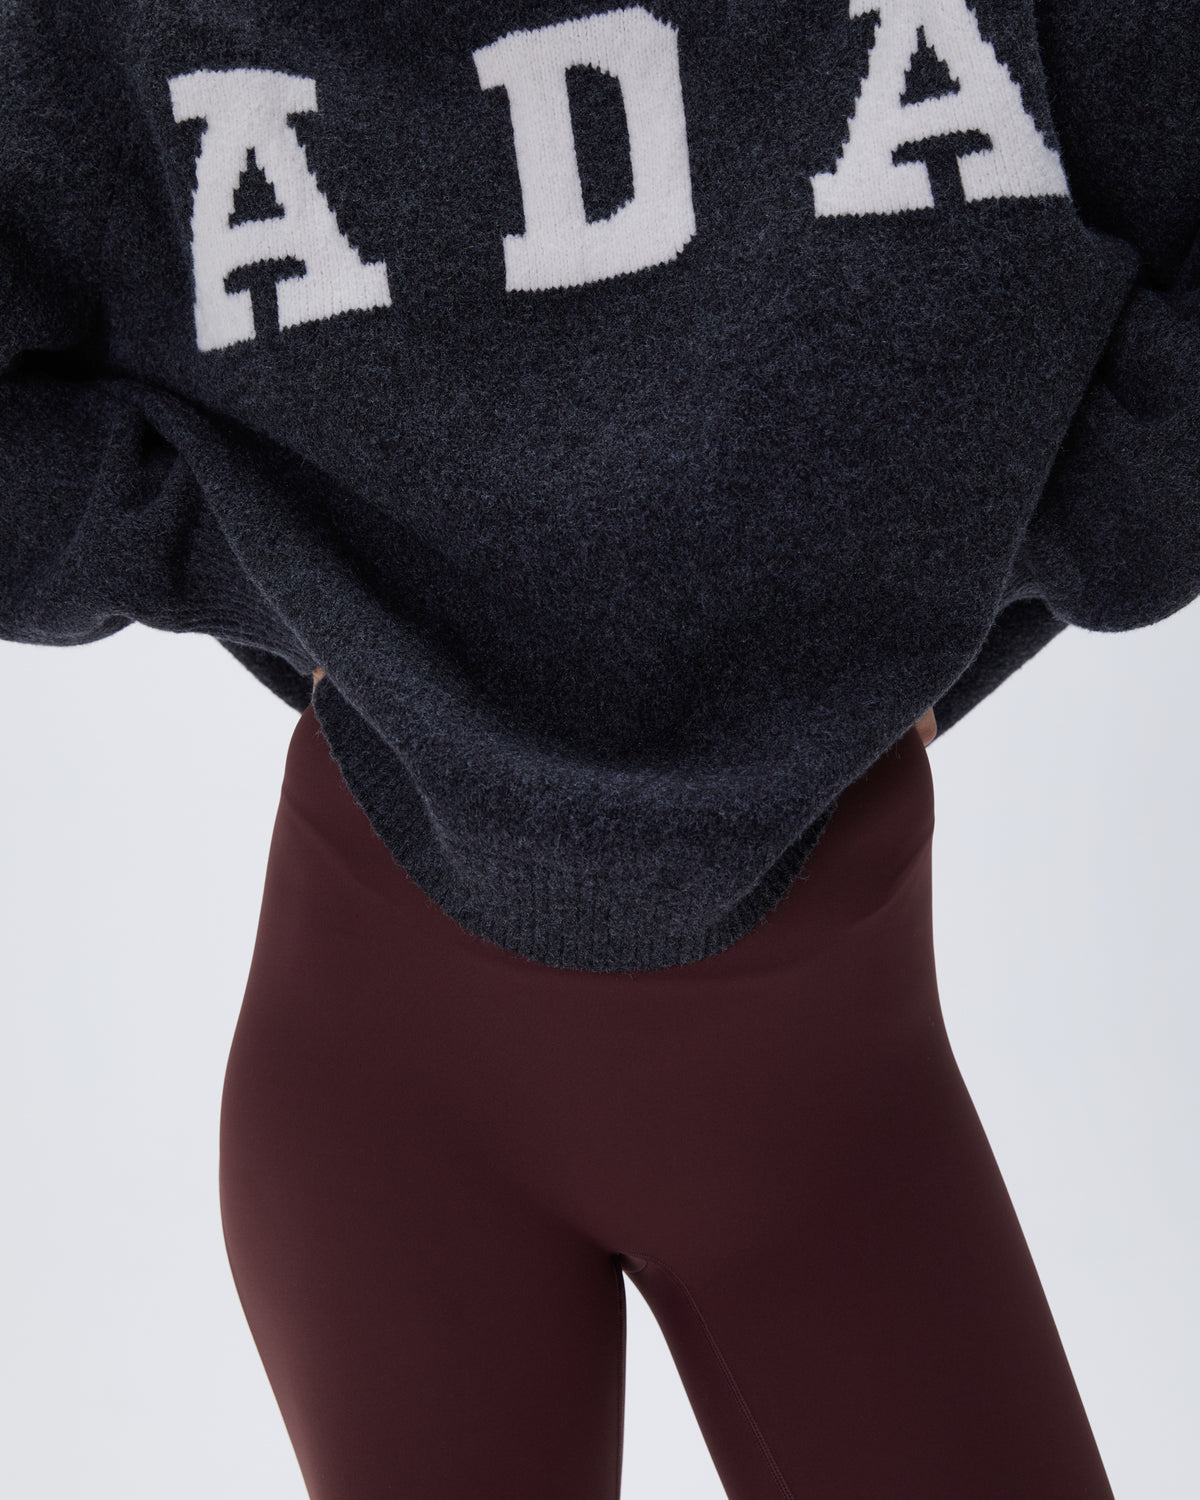 Aria Knitted Oversized Top & Legging Set Black - Ermarolla